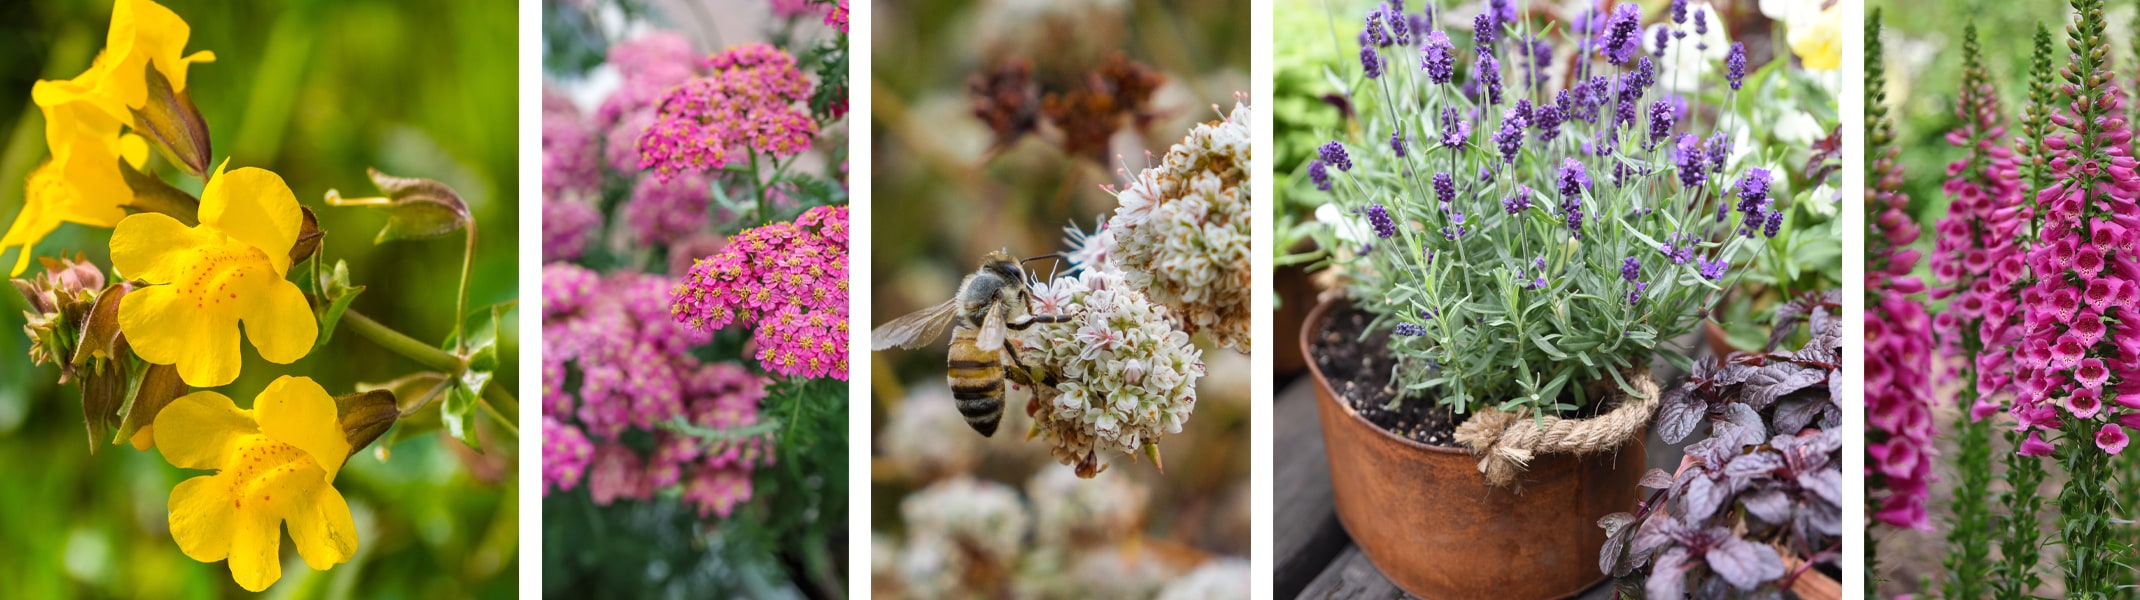 pollinator friendly plants mimulus, yarrow, buckwheat, lavender, foxglove